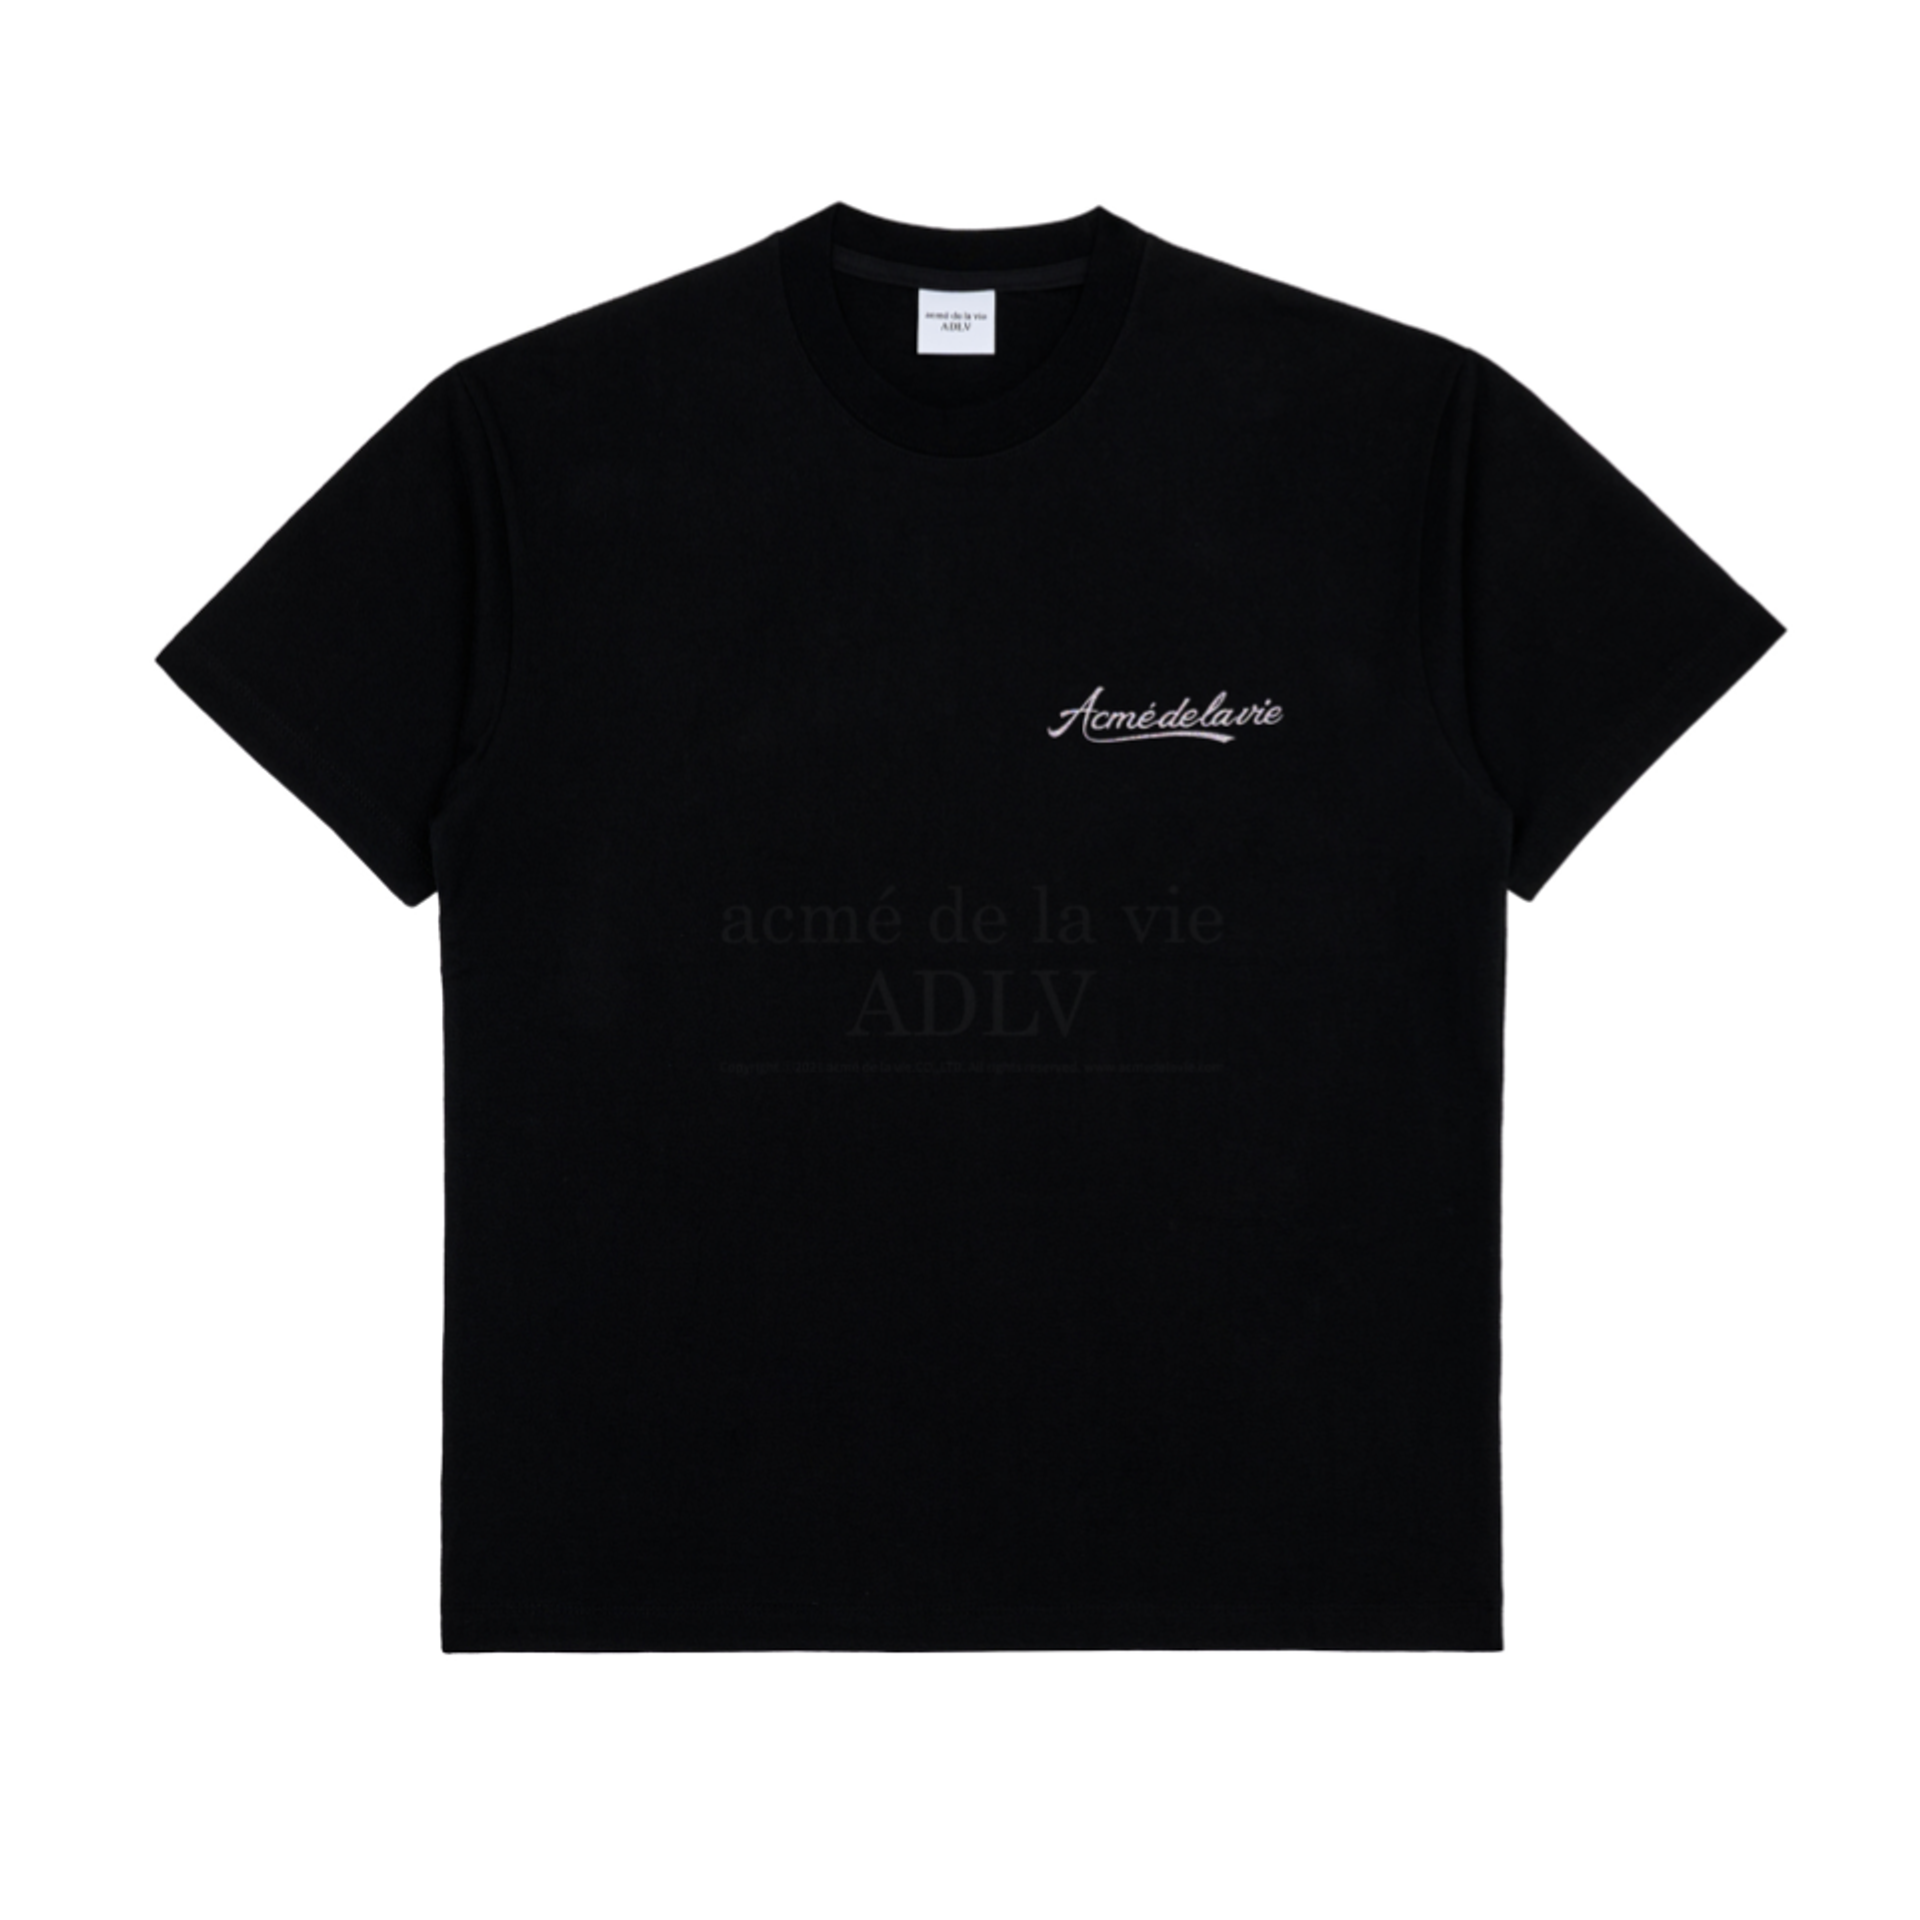 Acme De La Vie Pearl Printing Logo Short Sleeve T-Shirt 'Black'